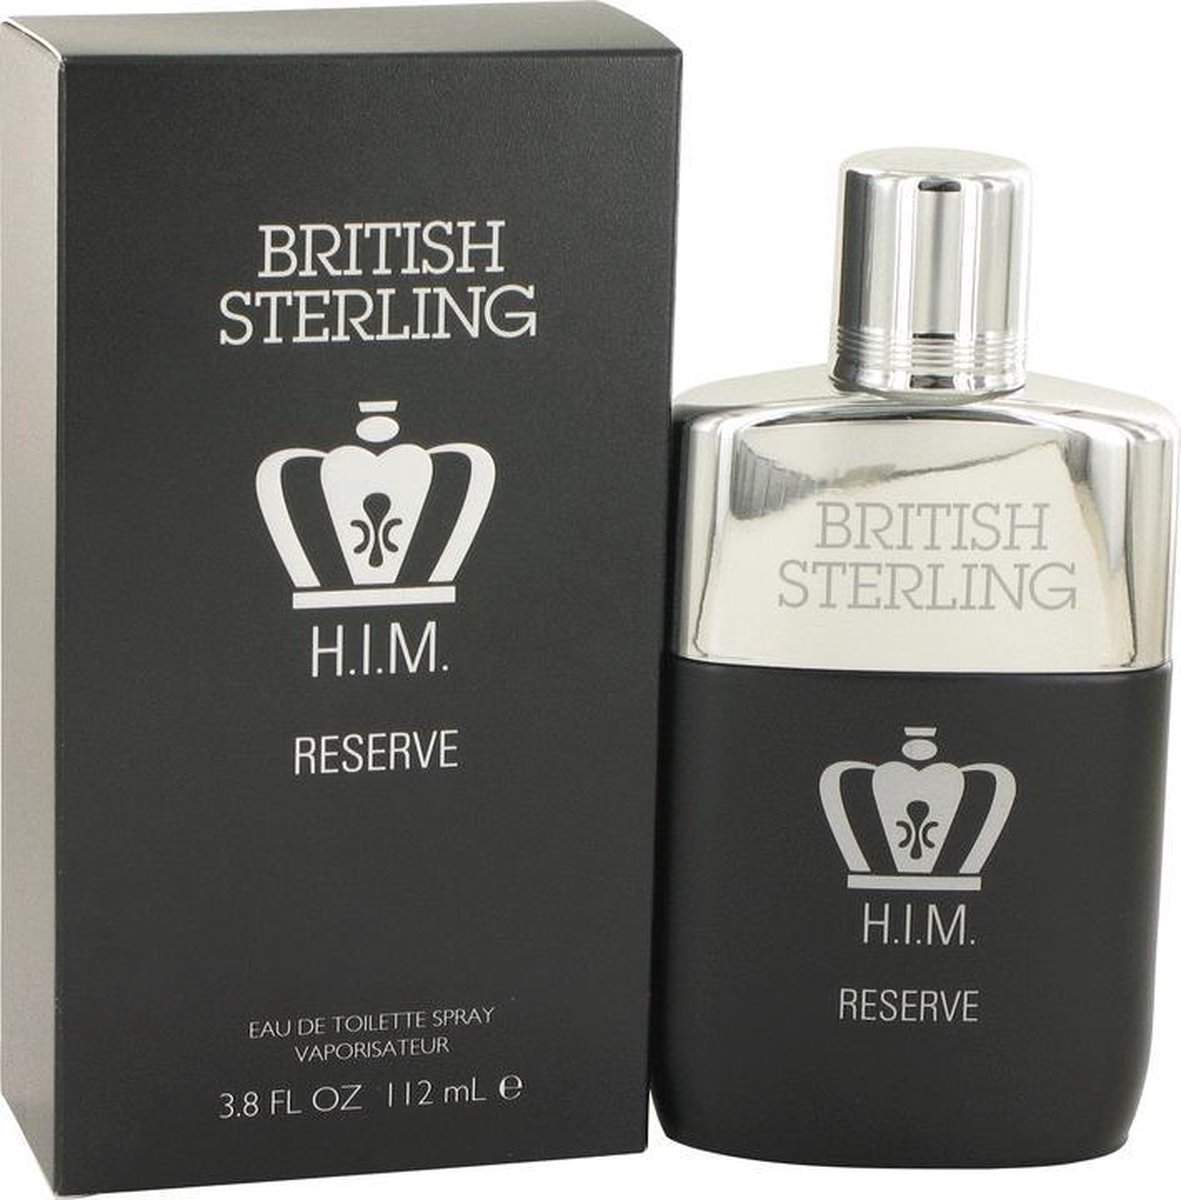 British Sterling Him Reserve By Dana Edt Spray 115 ml - Fragrances For Men